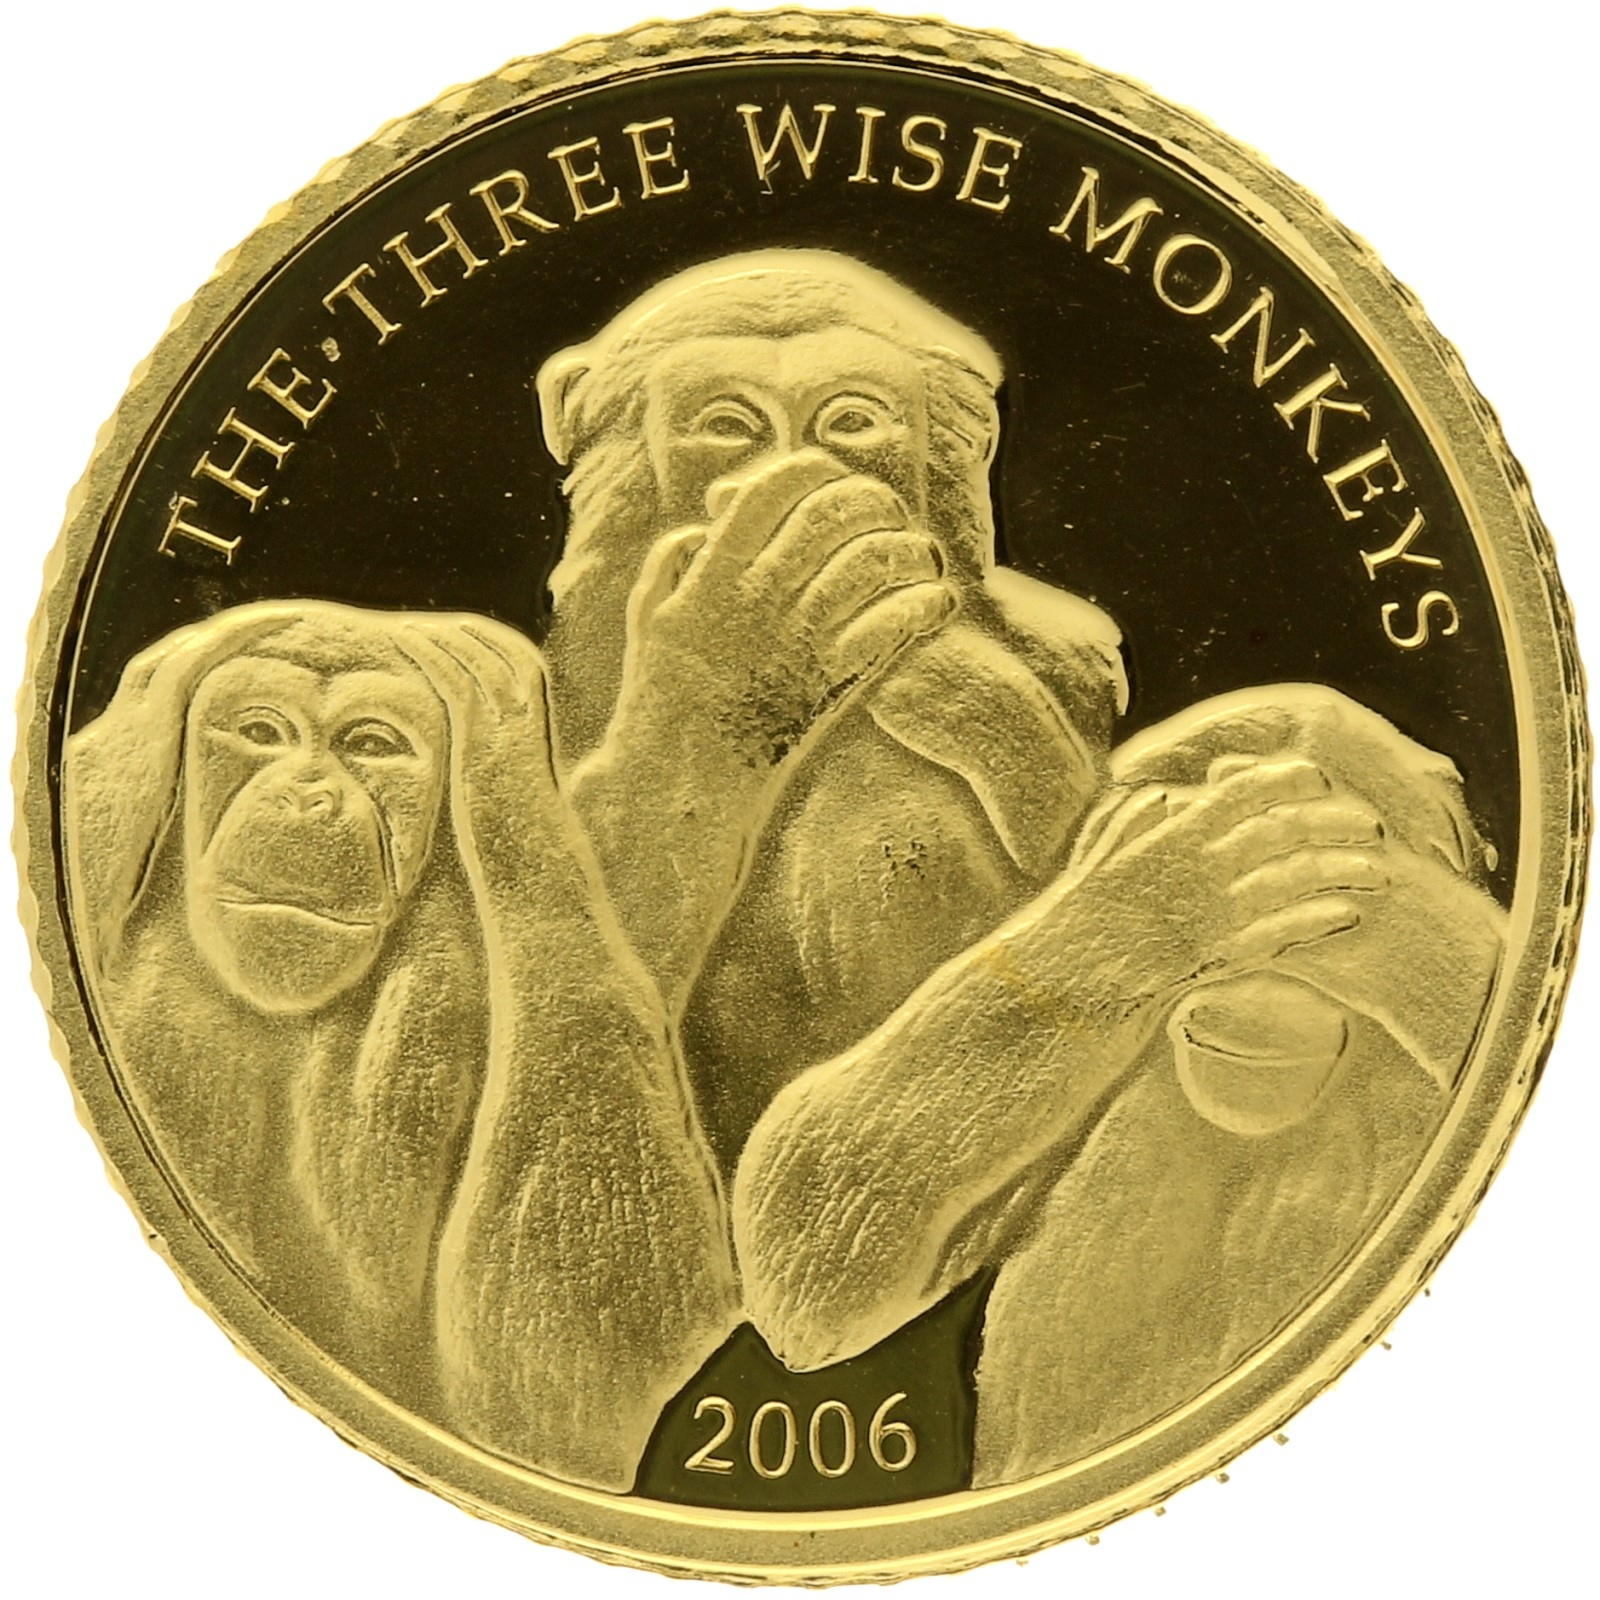 Somalia - 4000 shillings - 2006 - Three wise monkeys - 1/25oz 